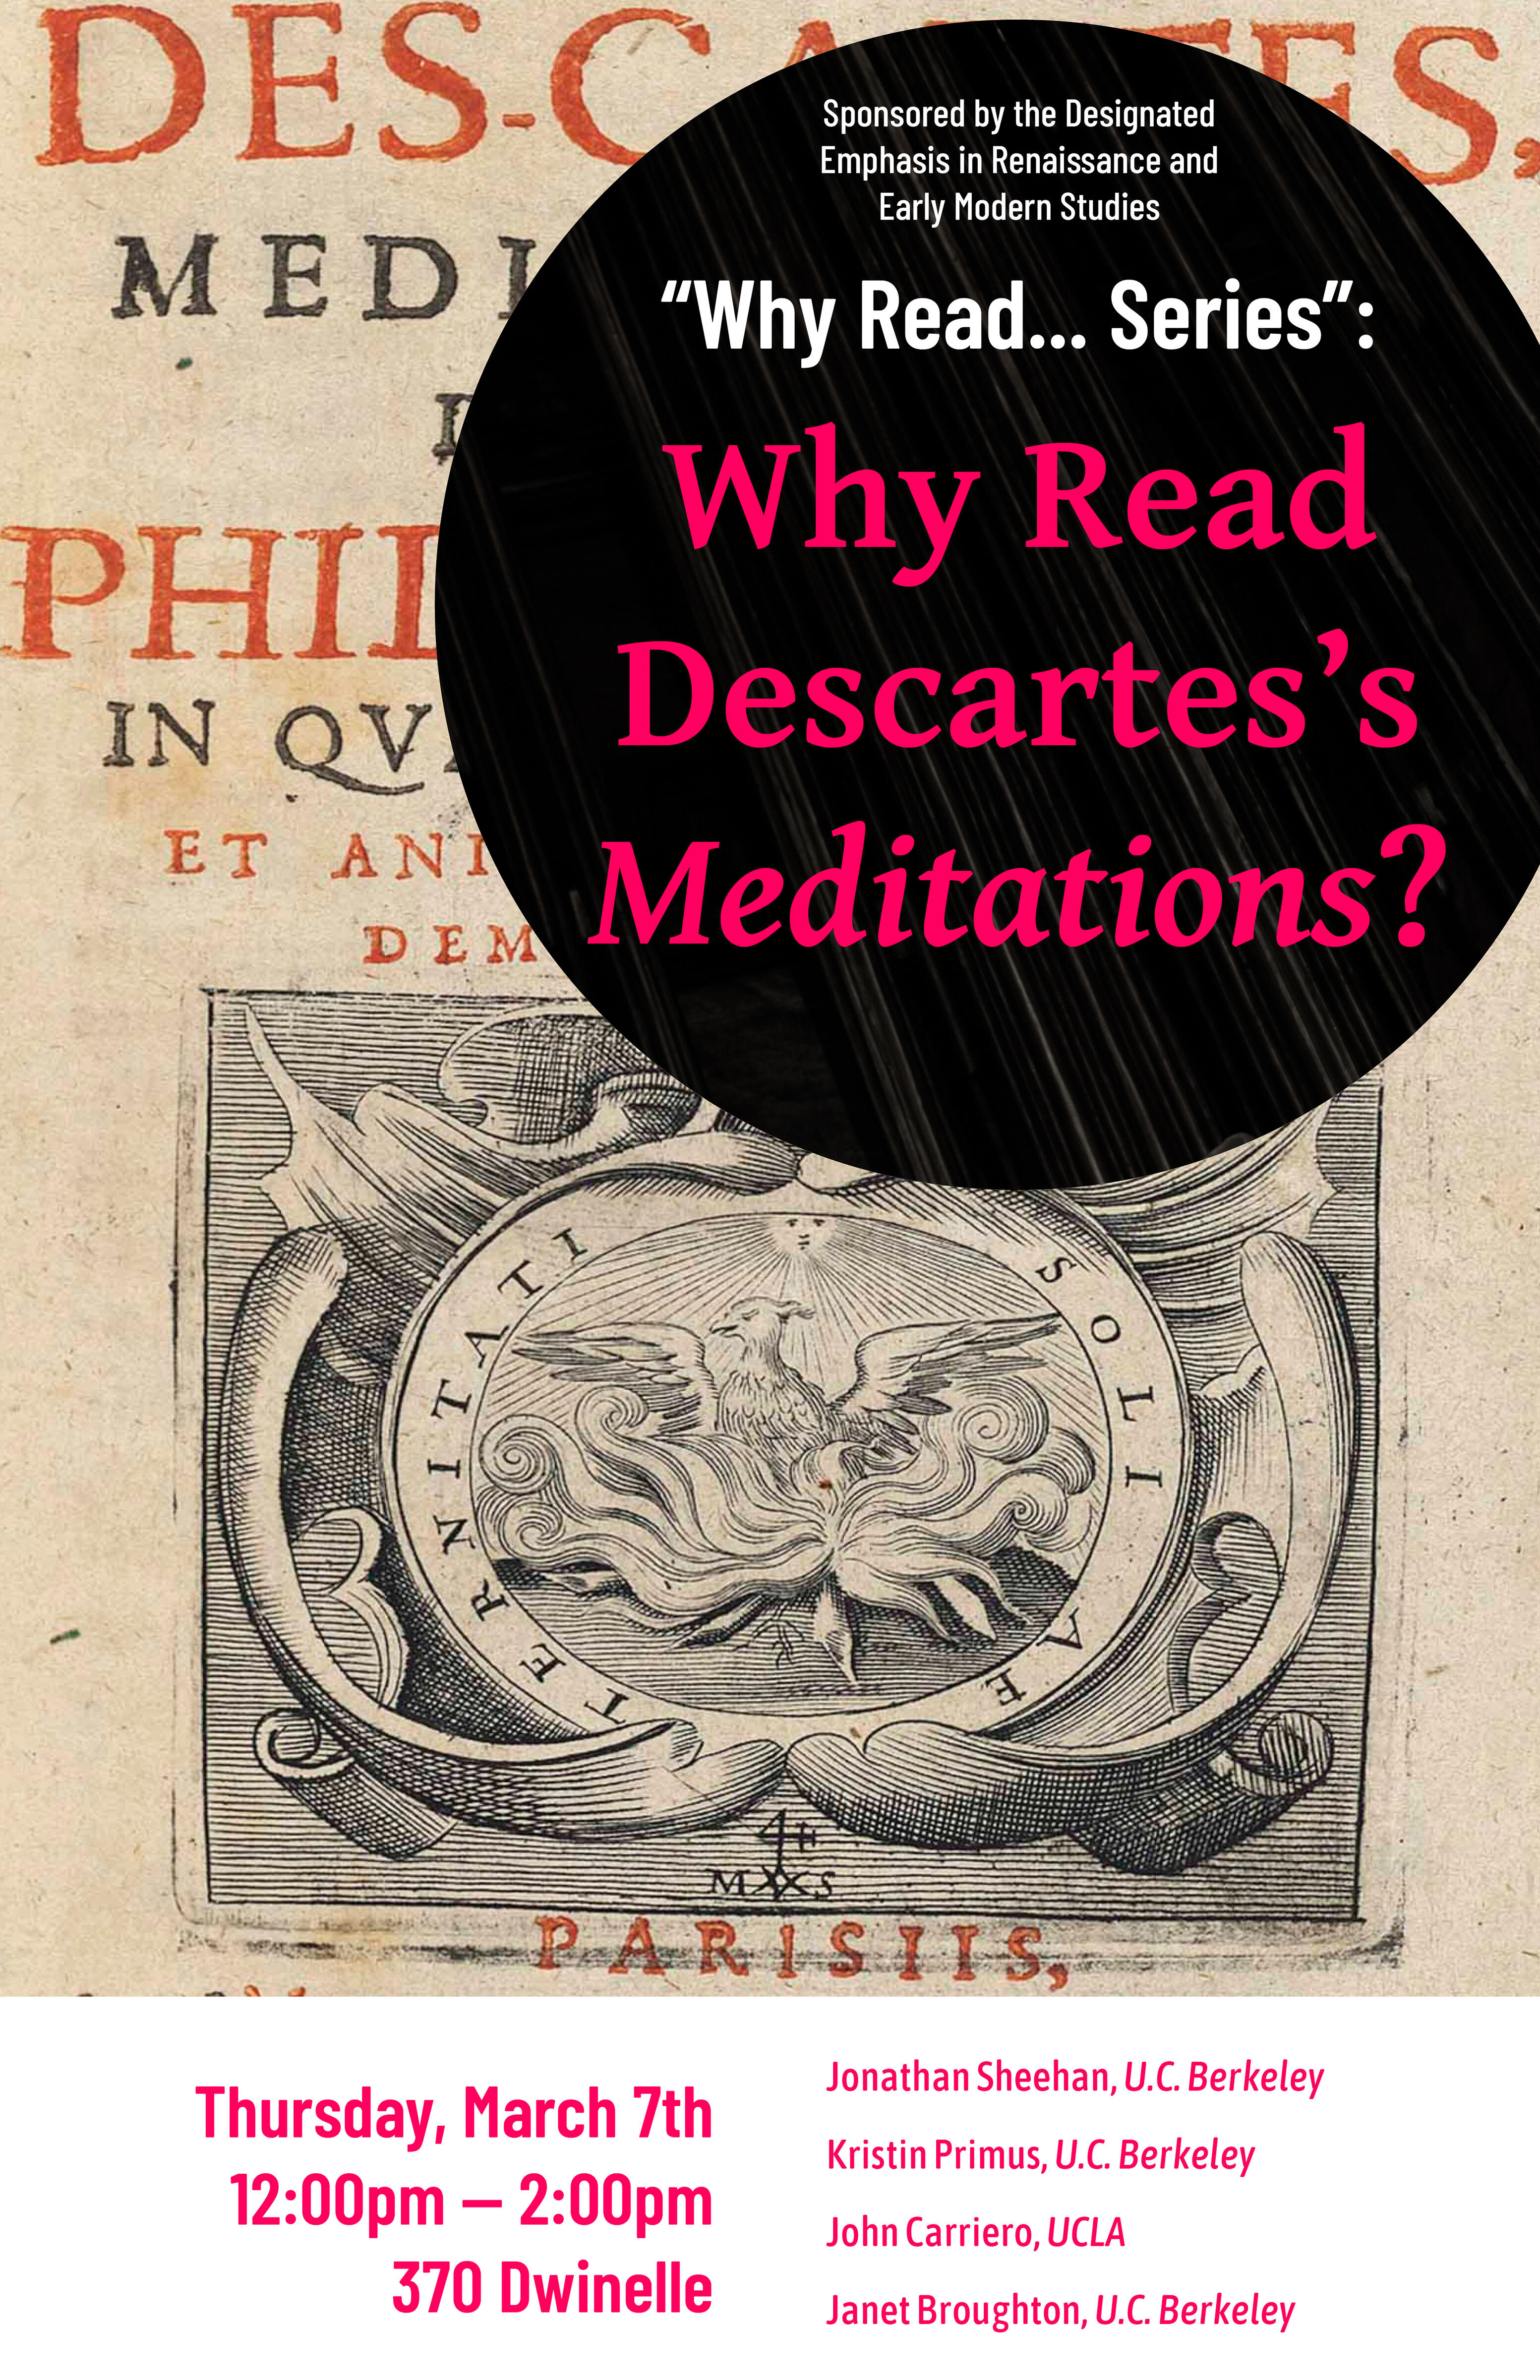  Why Read Descartes’s Meditations?